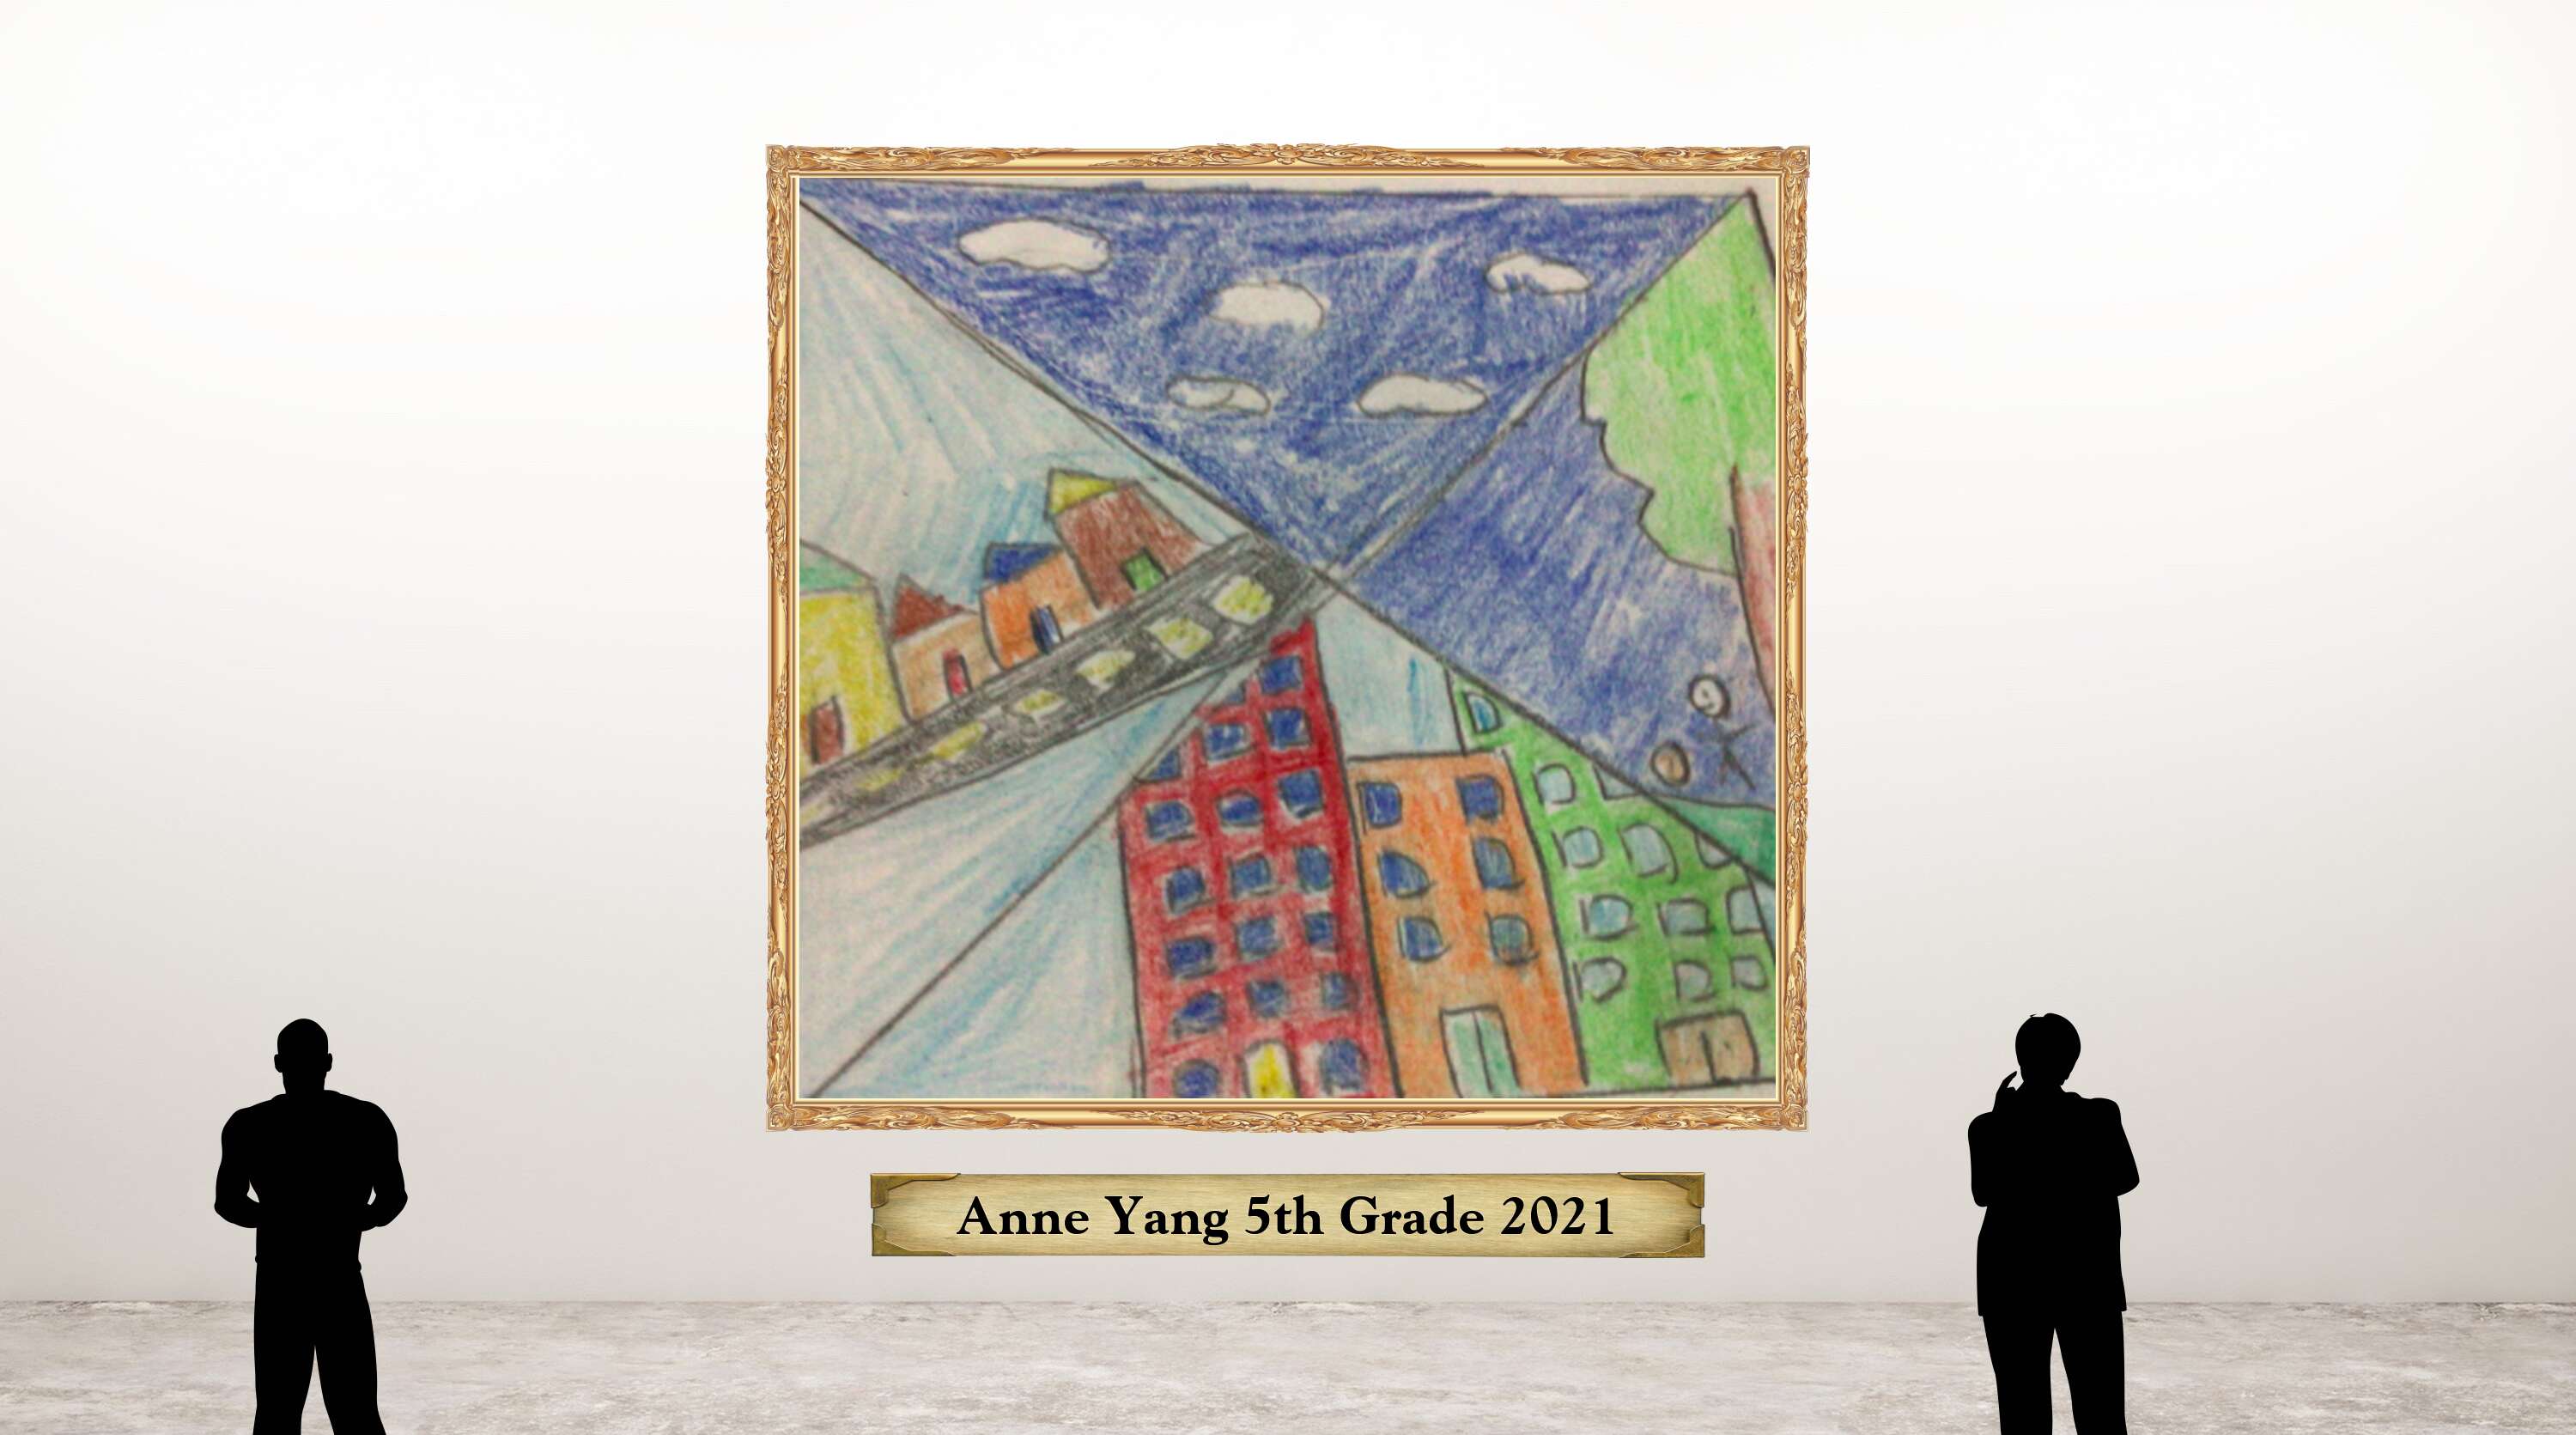 Anne Yang 5th Grade 2021